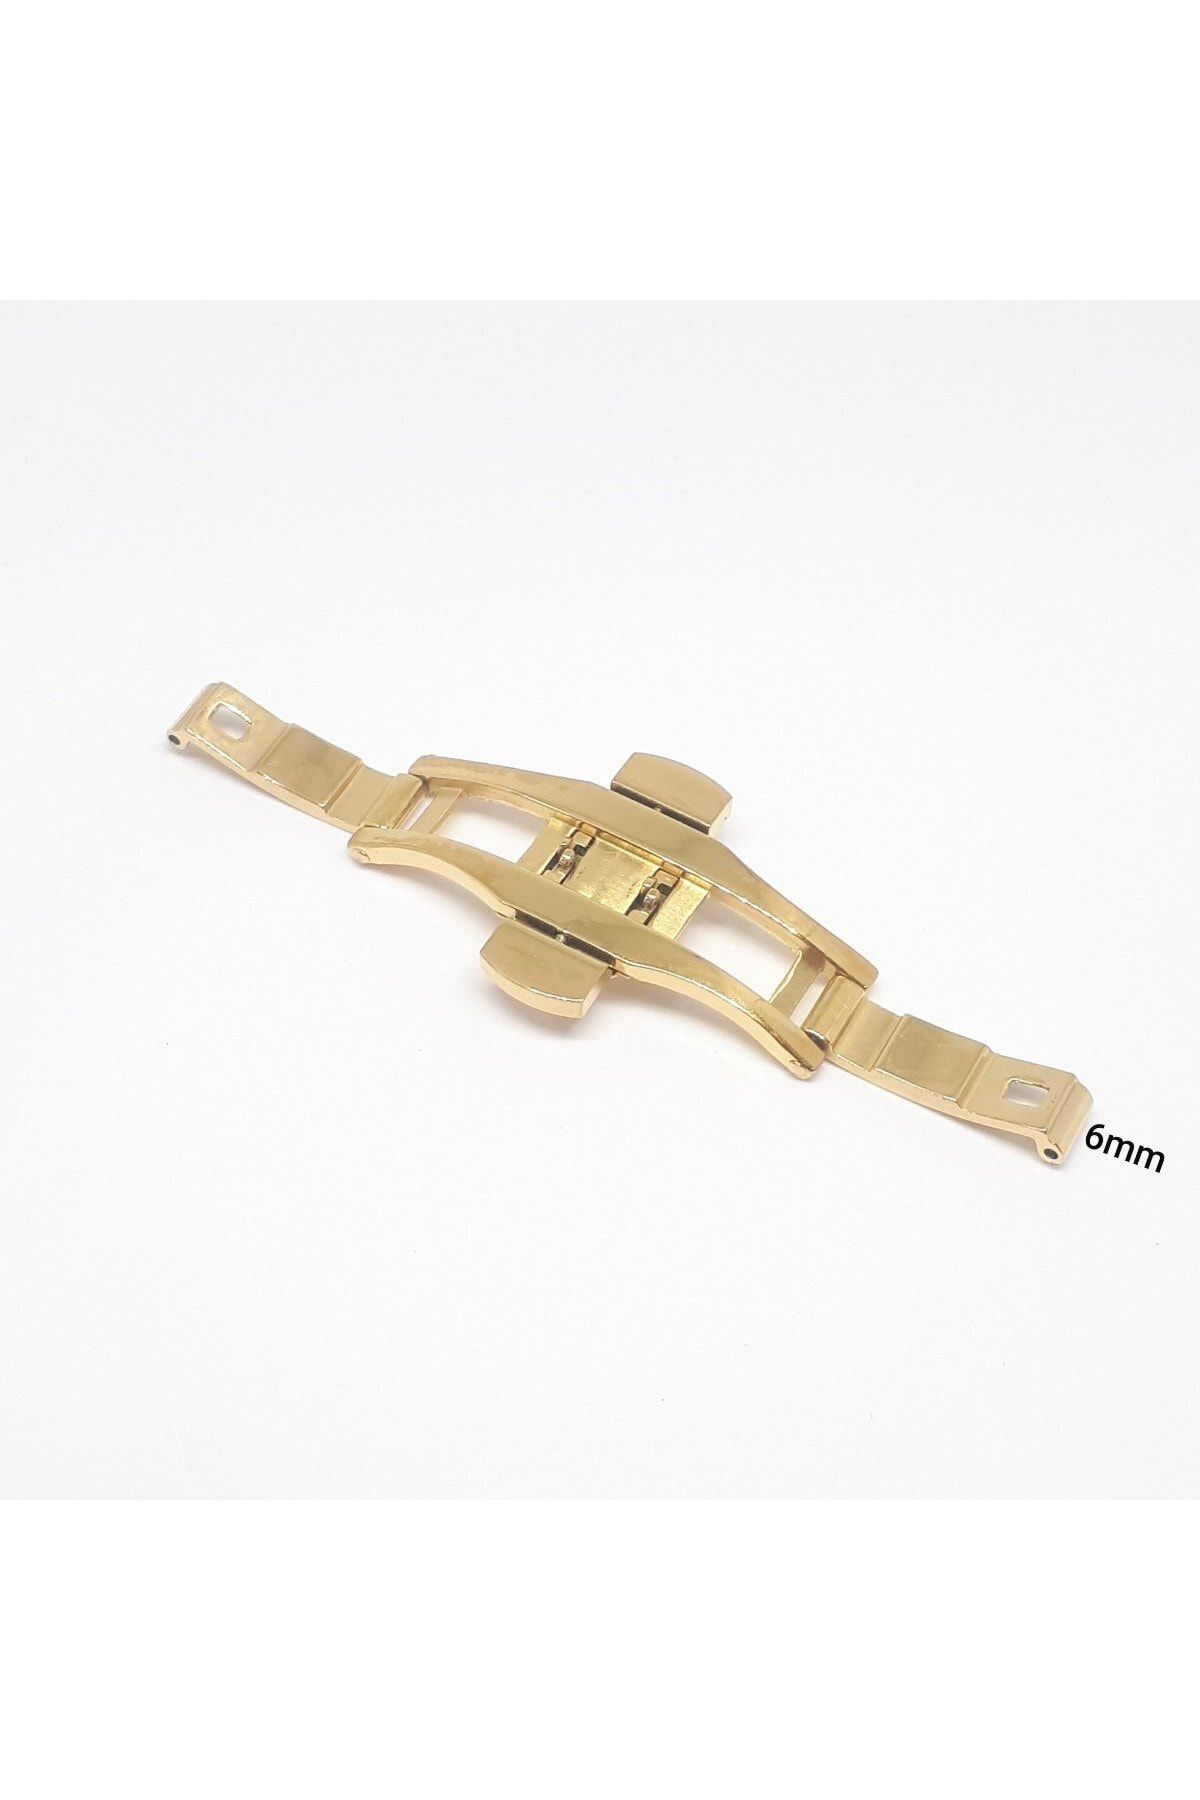 atasaat Emporio Armani Tissot Saat Uyumlu Metal Kordon Kelebek Basmalı Kilit Sarı Gold - 6 mm